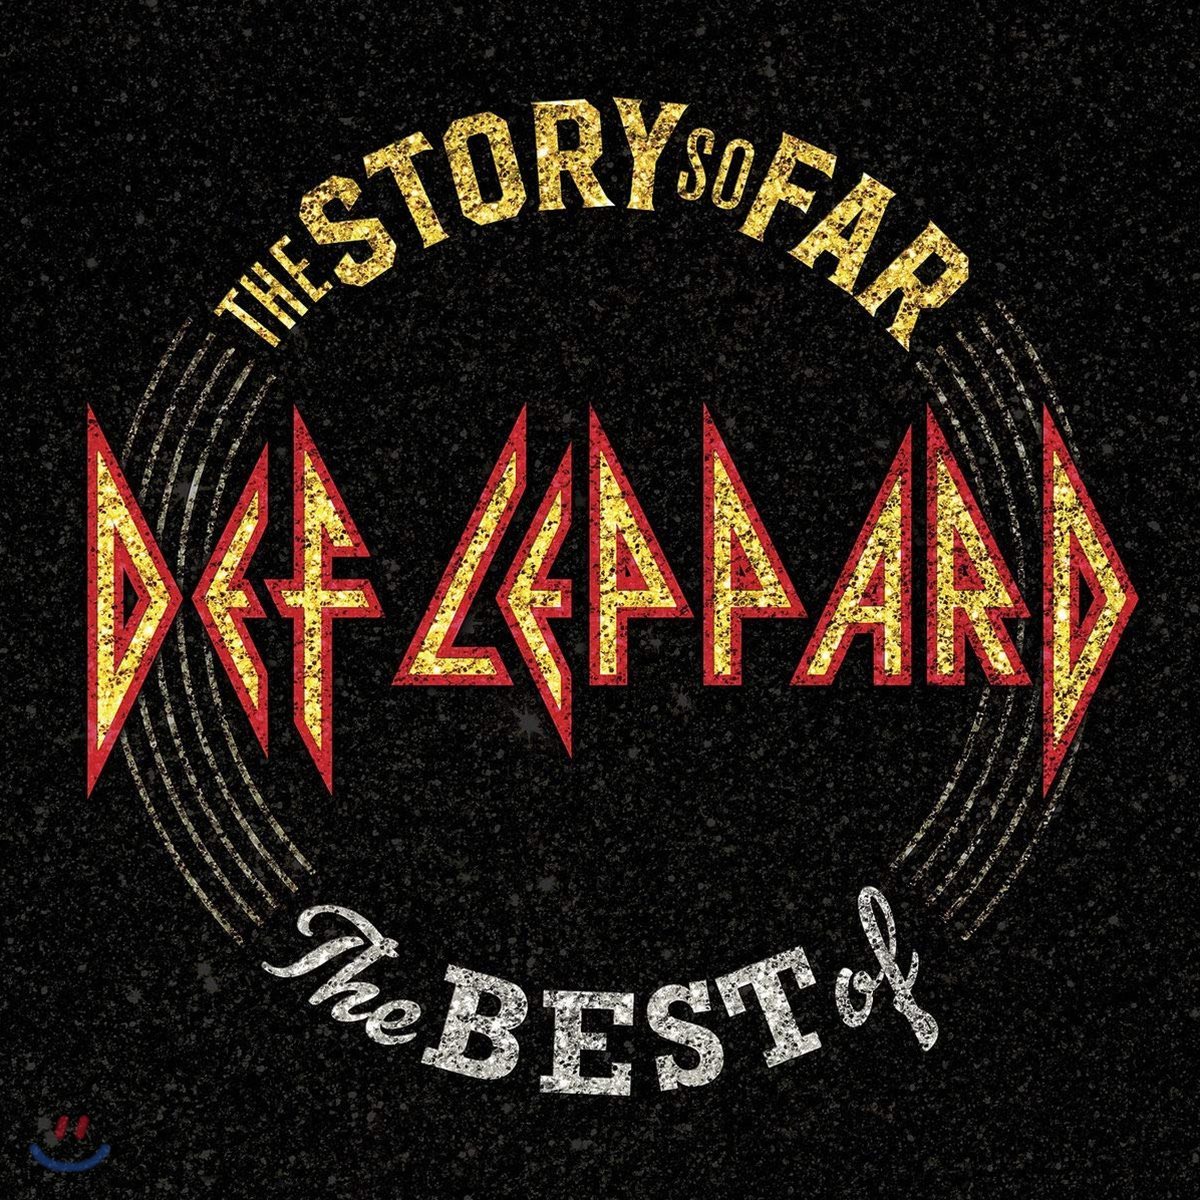 Def Leppard - Story So Far... The Best 데프 레퍼드 베스트 앨범 [2LP]